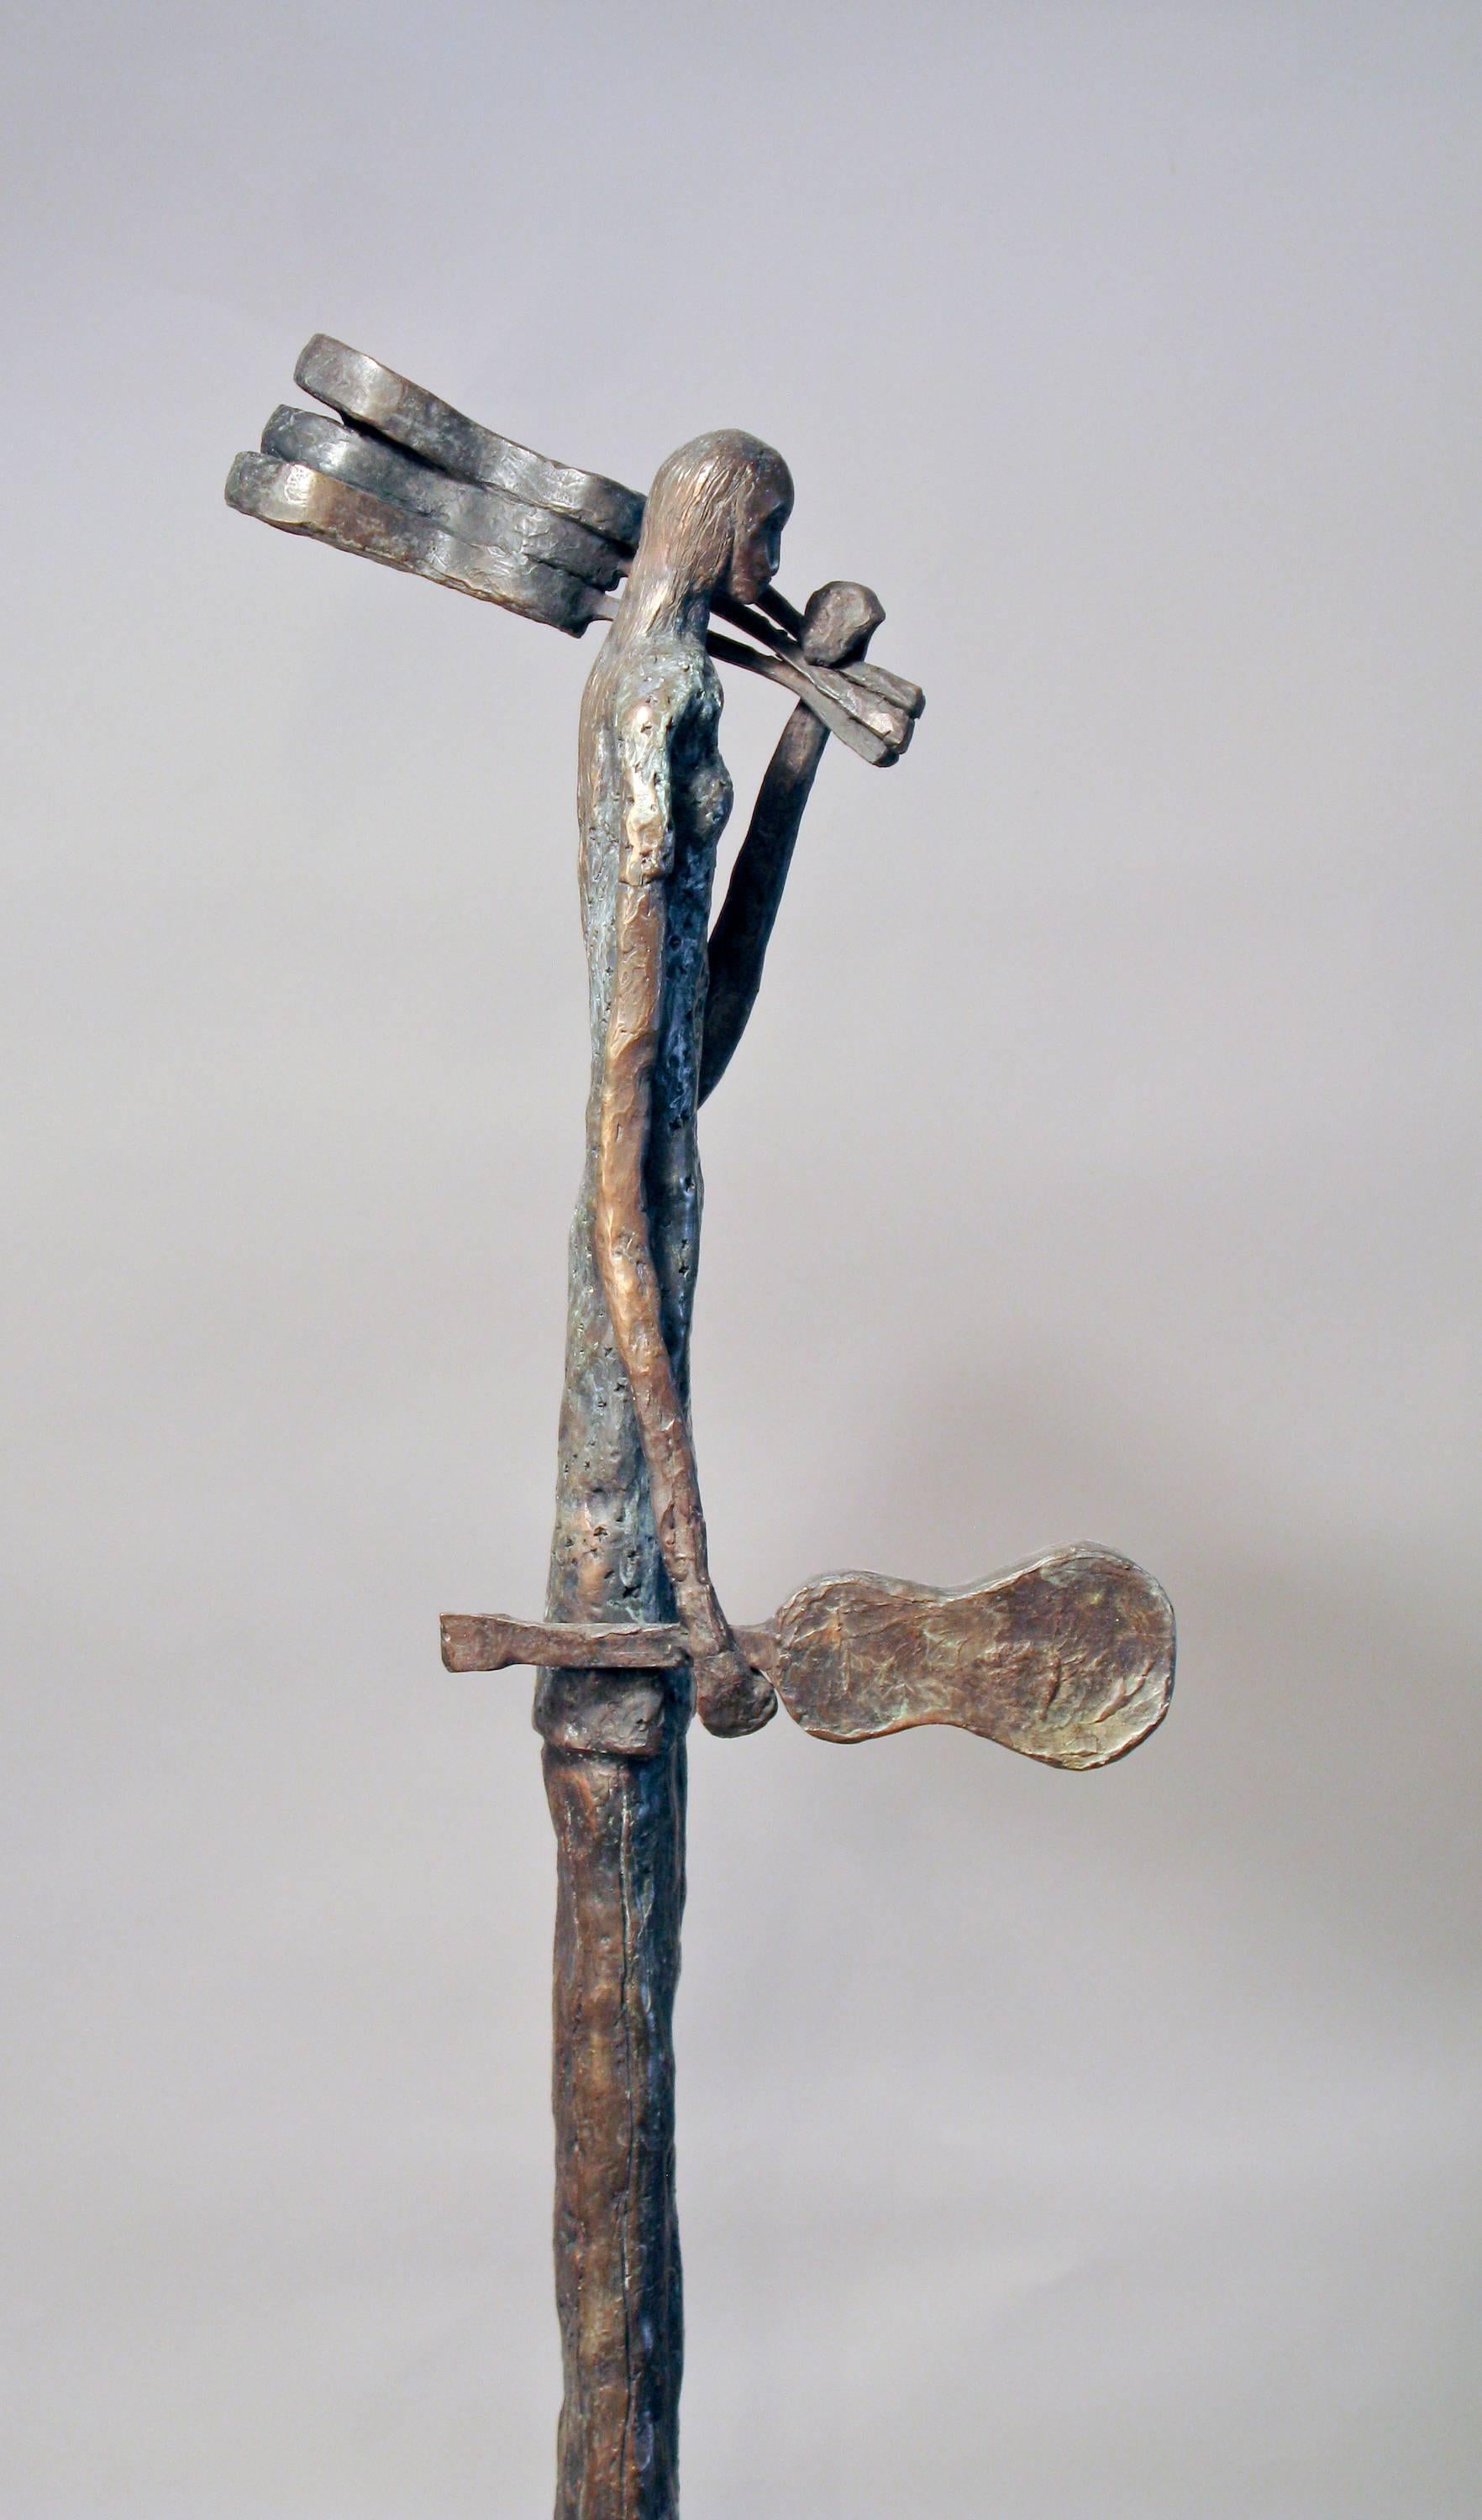 Guitarras, bronze sculpture, vertical, guitar seller, rustic, textured bronze - Contemporary Sculpture by Eduardo Oropeza